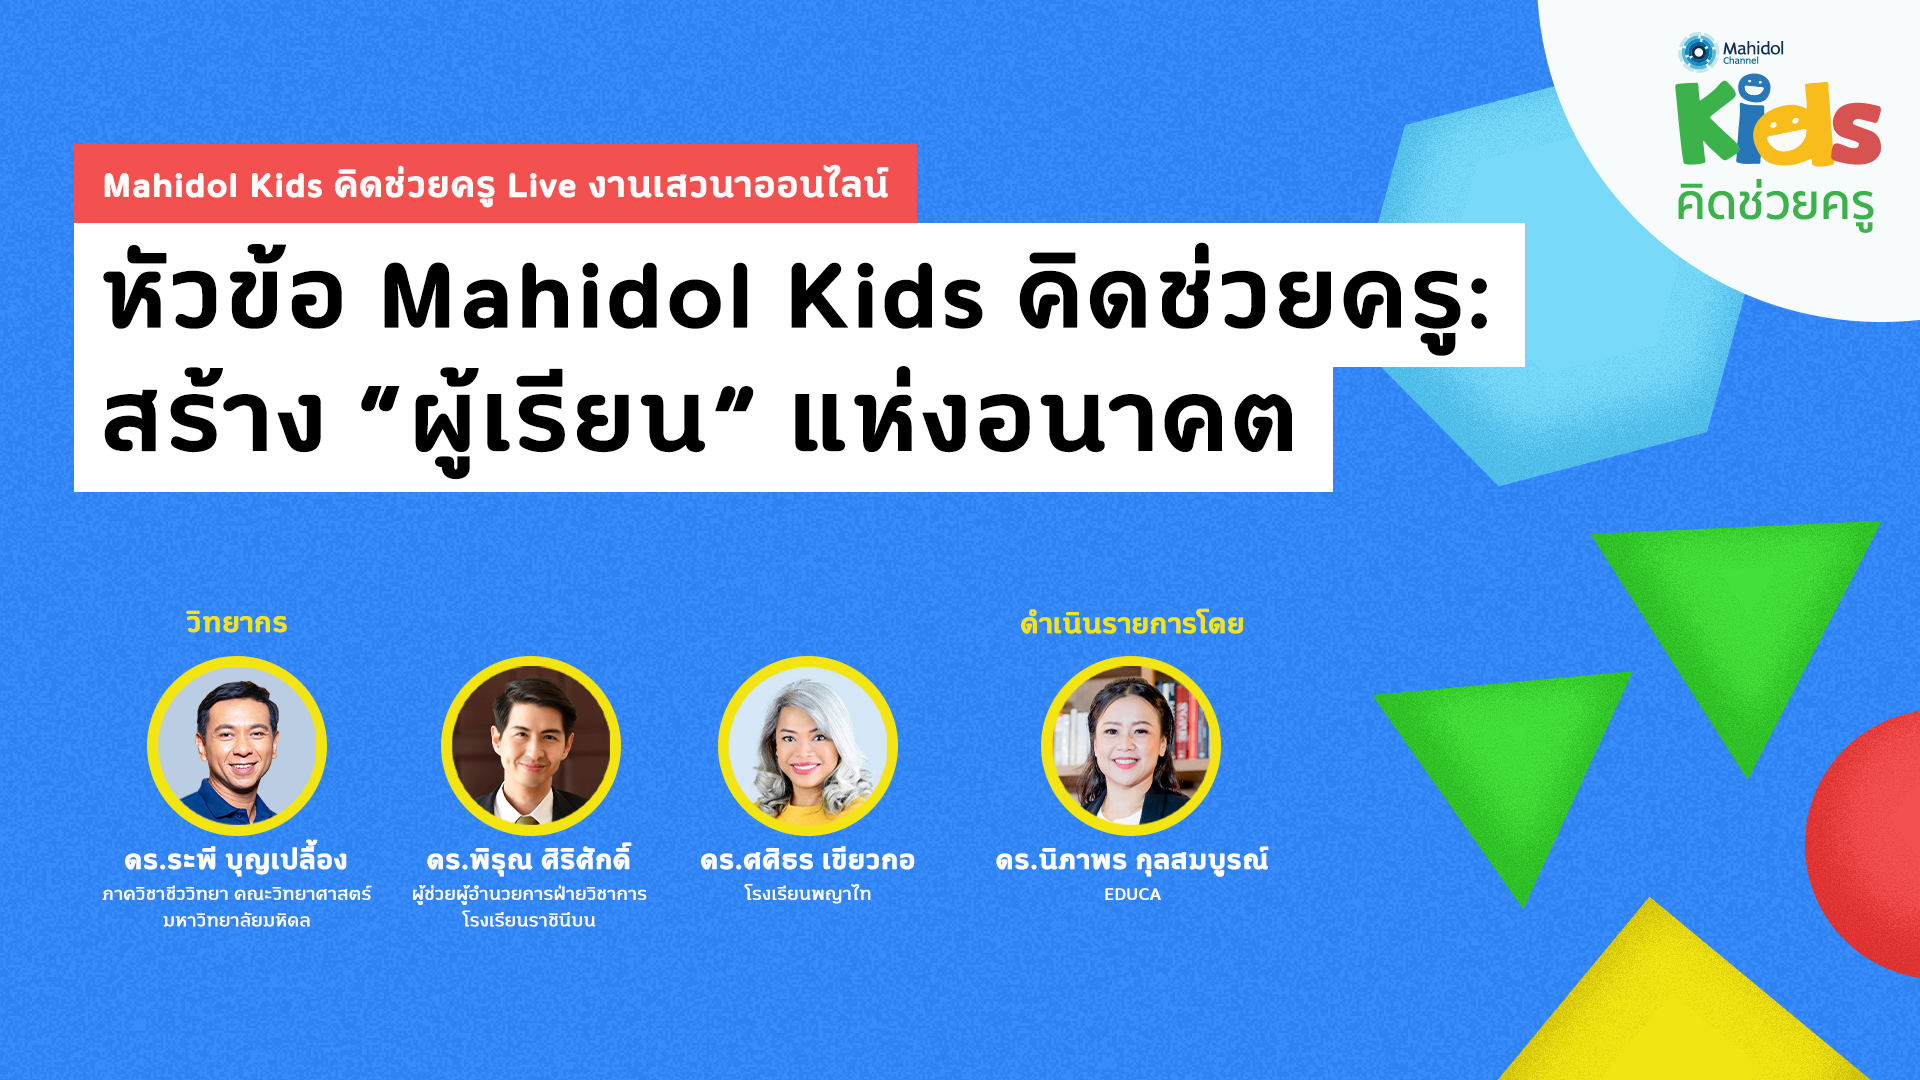 Mahidol Kids คิดช่วยครู : สร้าง “ผู้เรียน” แห่งอนาคต